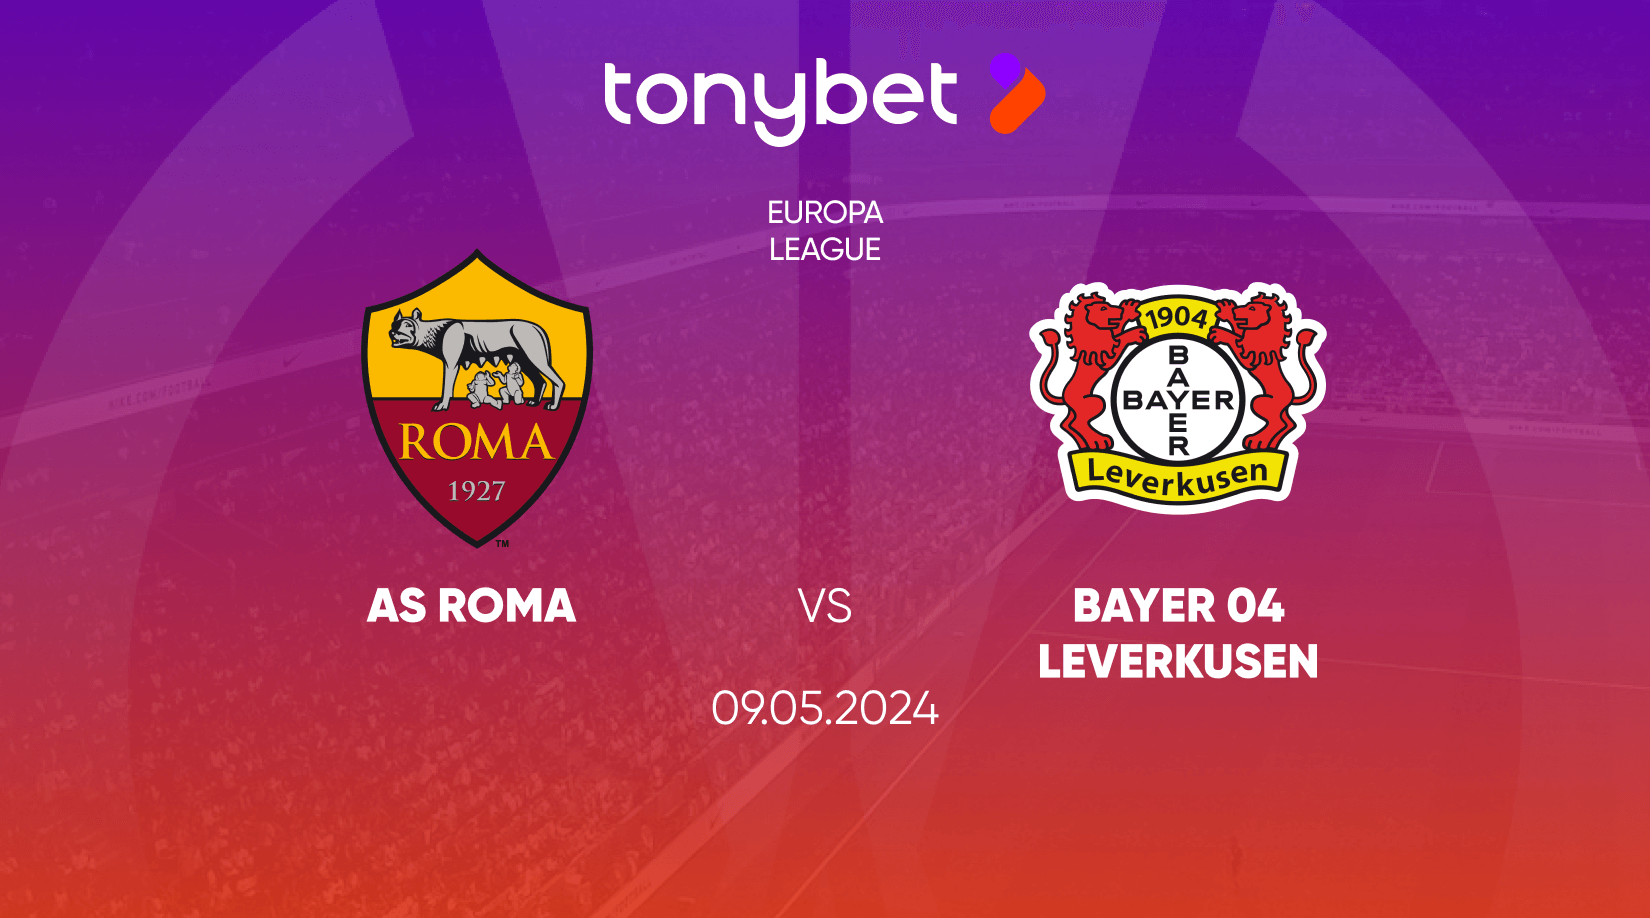 Bayer Leverkusen vs AS Roma, Prediction, Odds and Betting Tips 09/05/2024